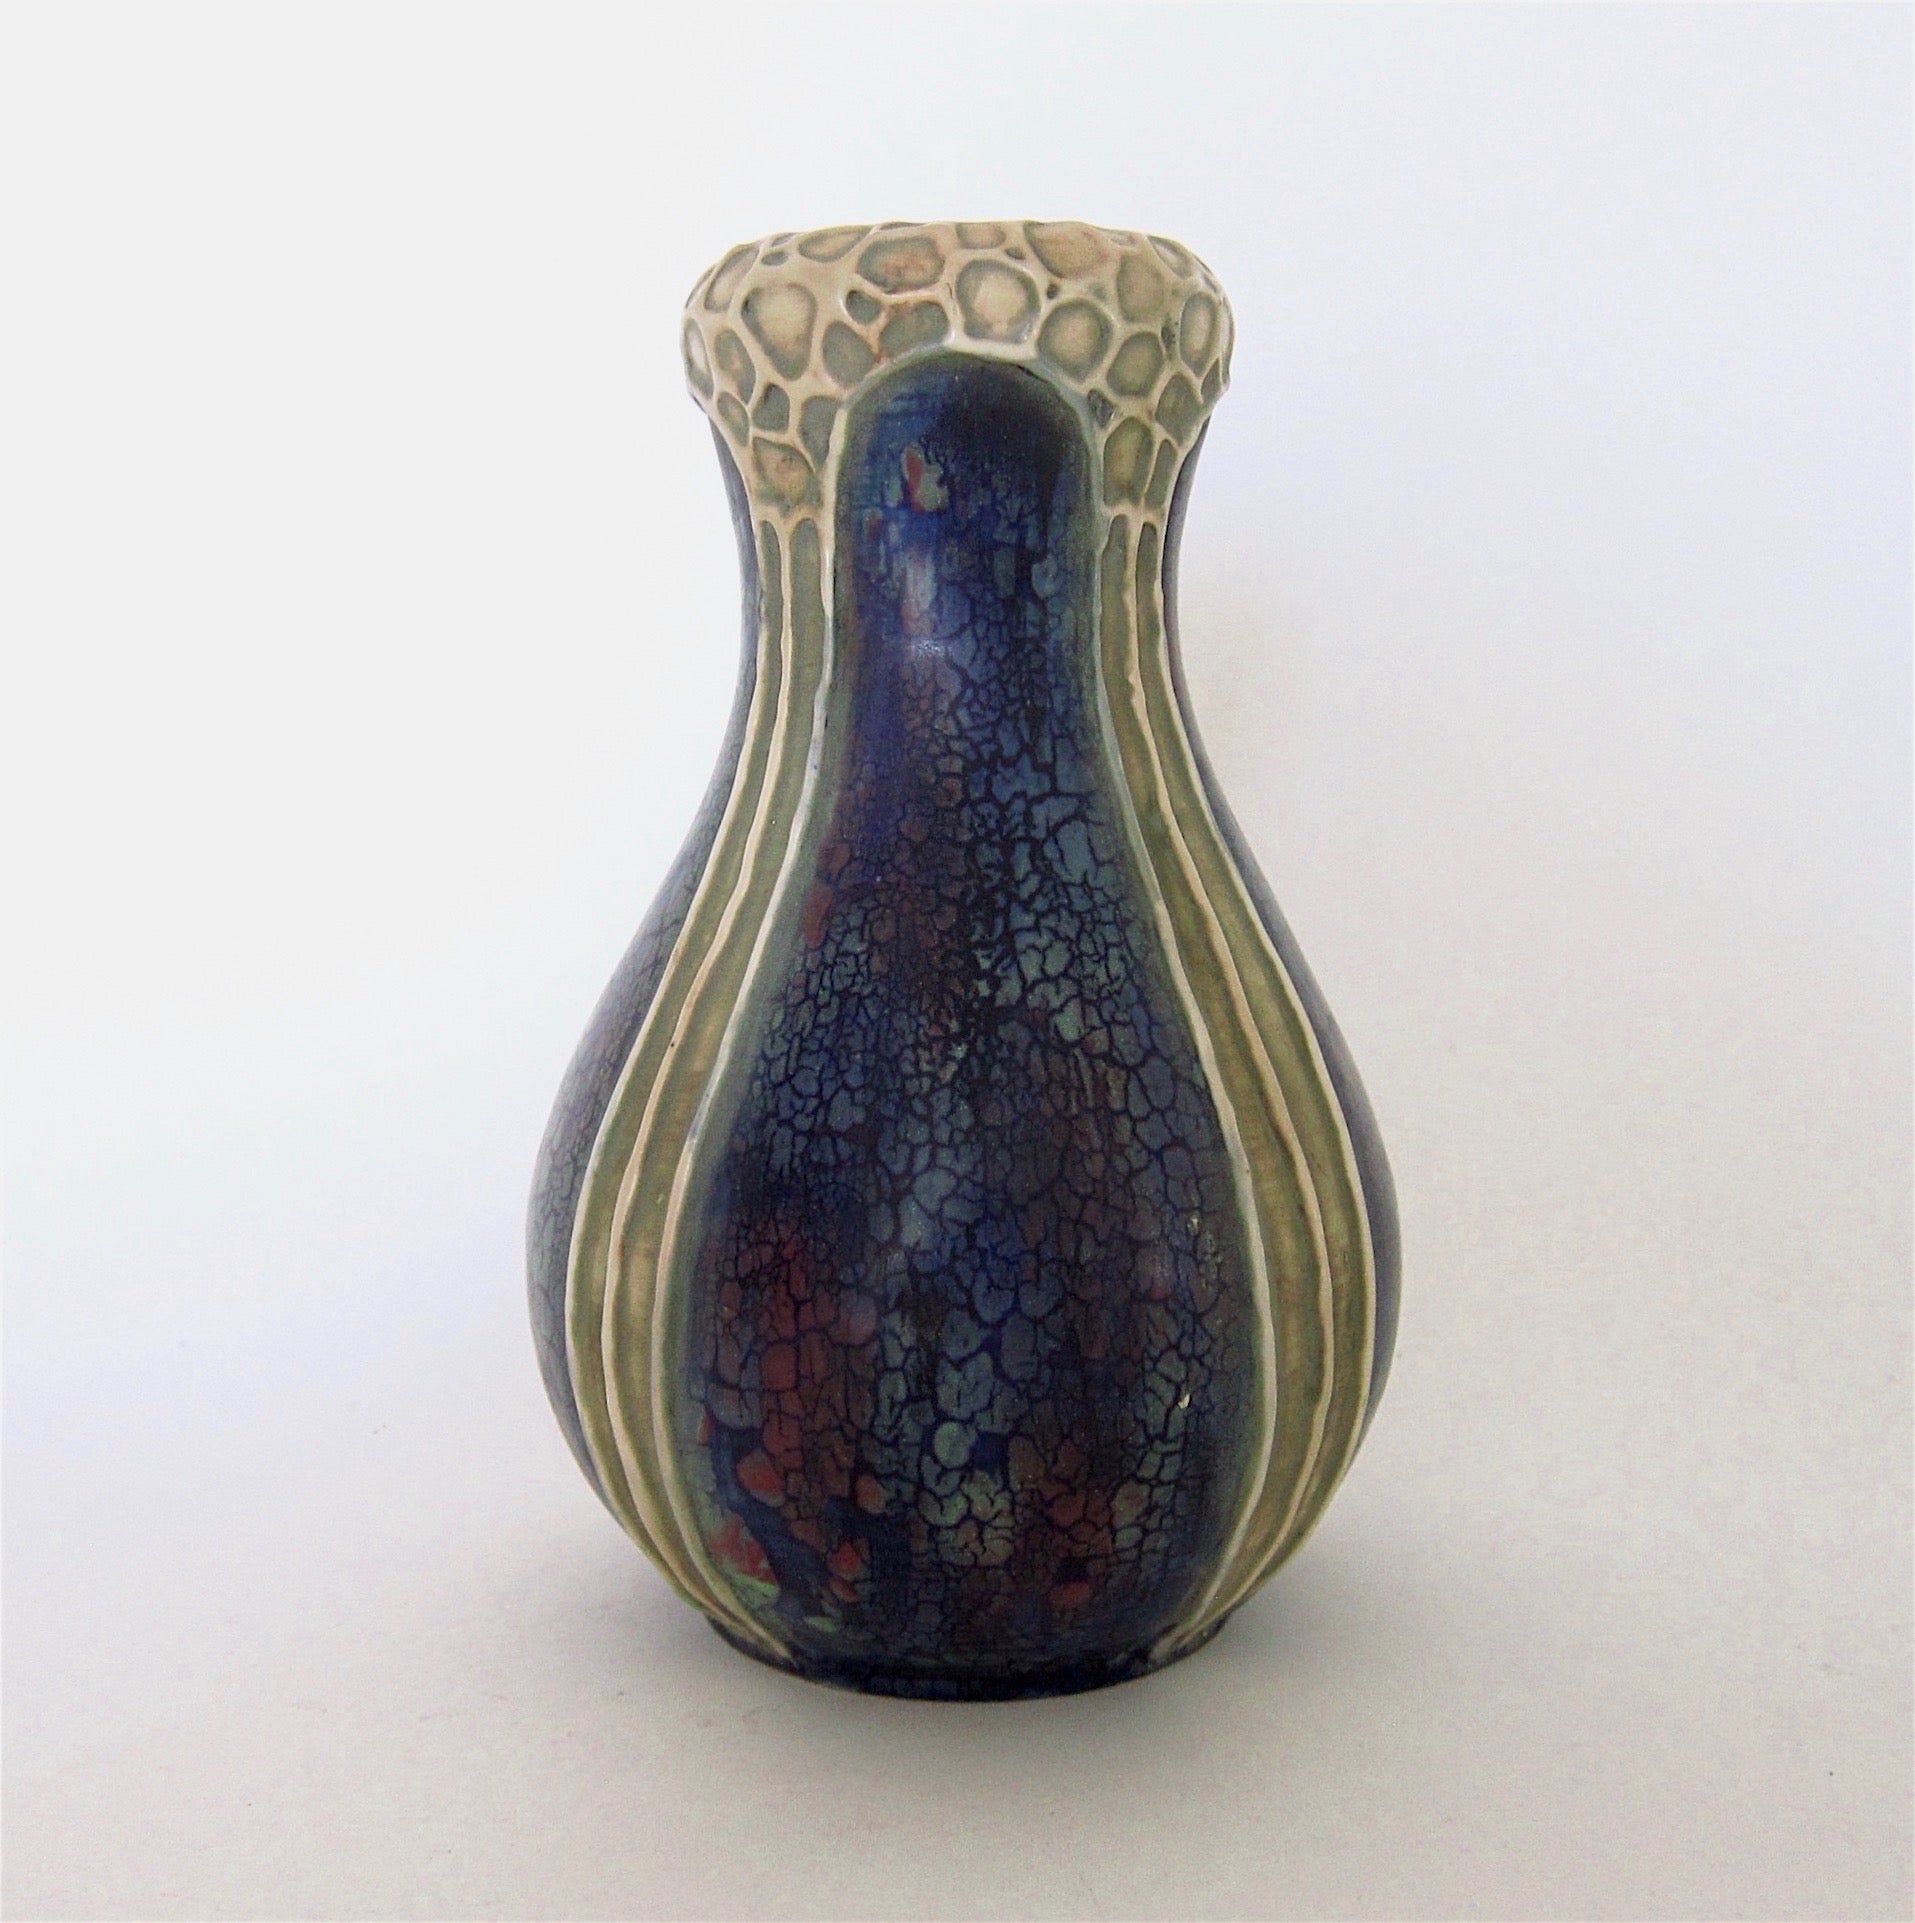 Vintage Amphora Vase with Applied Berries Teplitz-Turn area of Bohemia Austria Art Nouveau 1900s